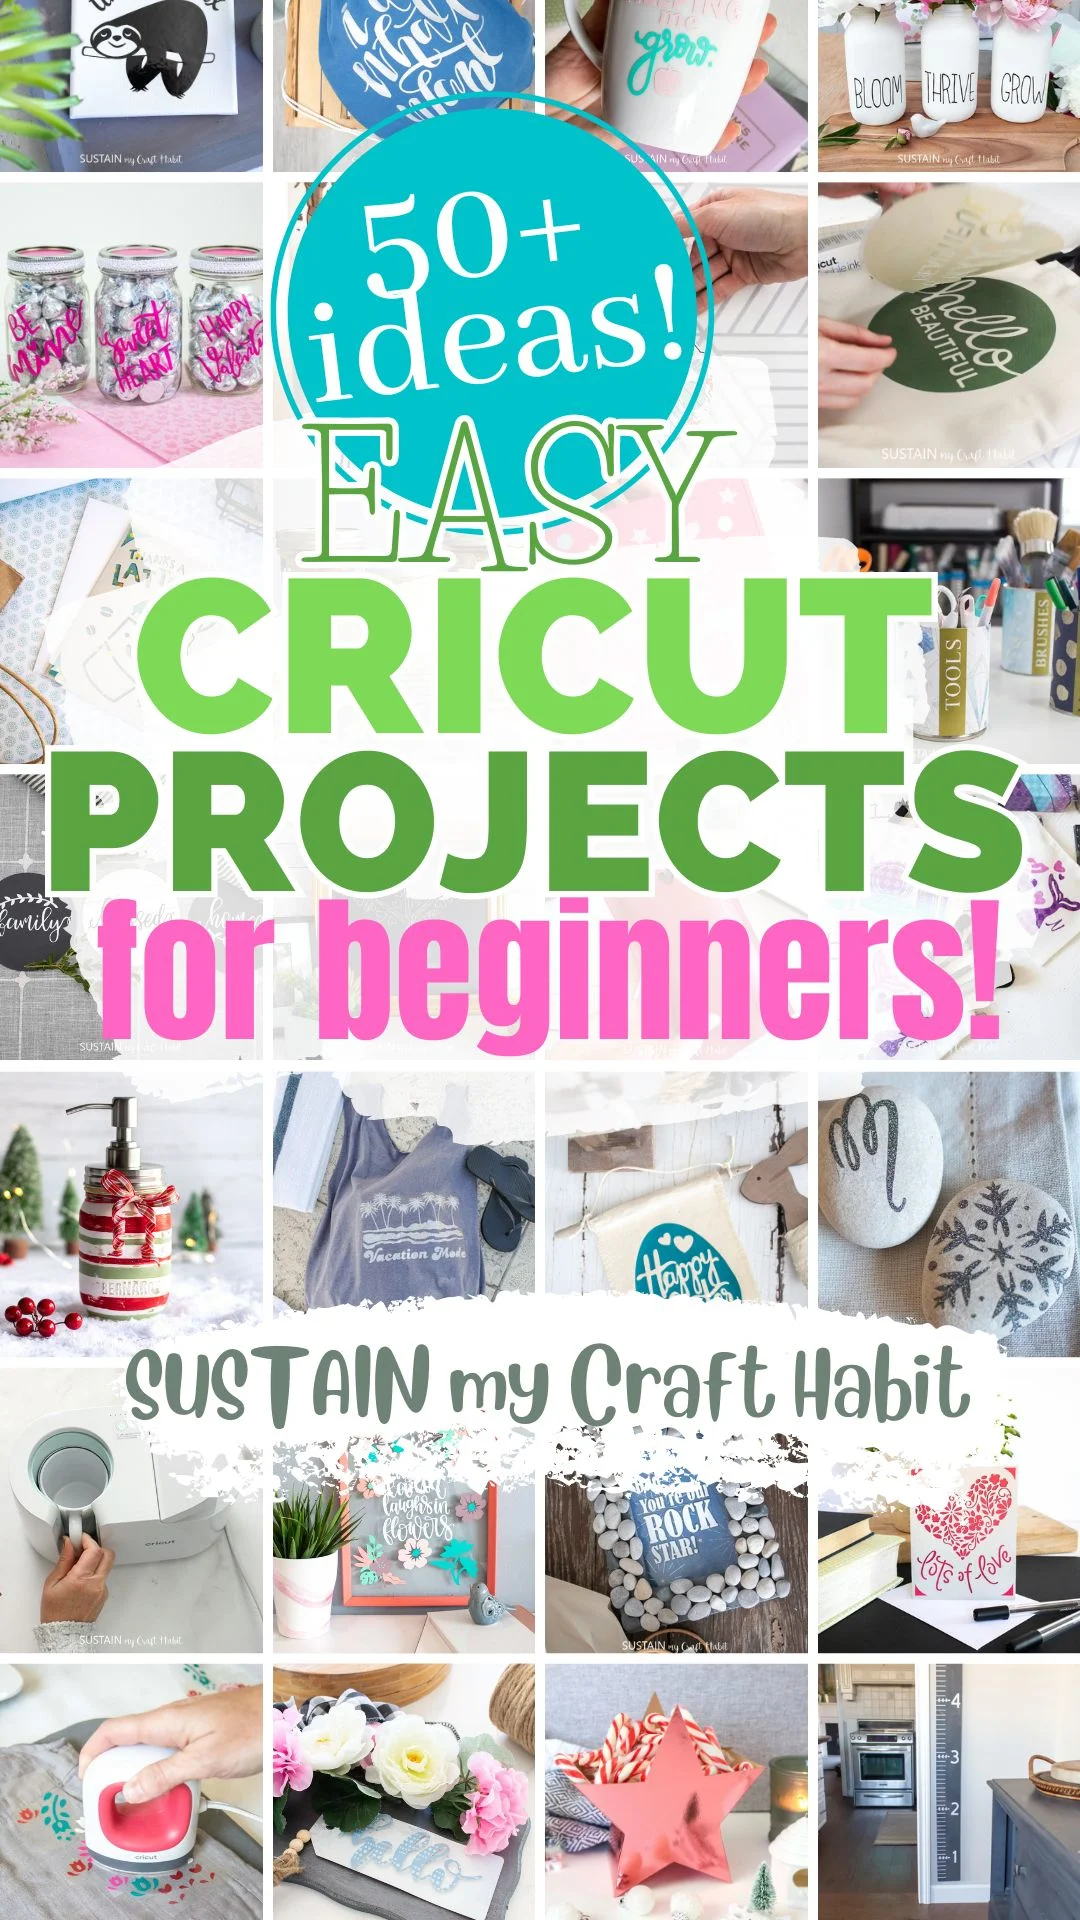 How To Make Shirts With Cricut Joy  Cricket joy projects craft ideas,  Cricut tutorials, Cricut projects beginner